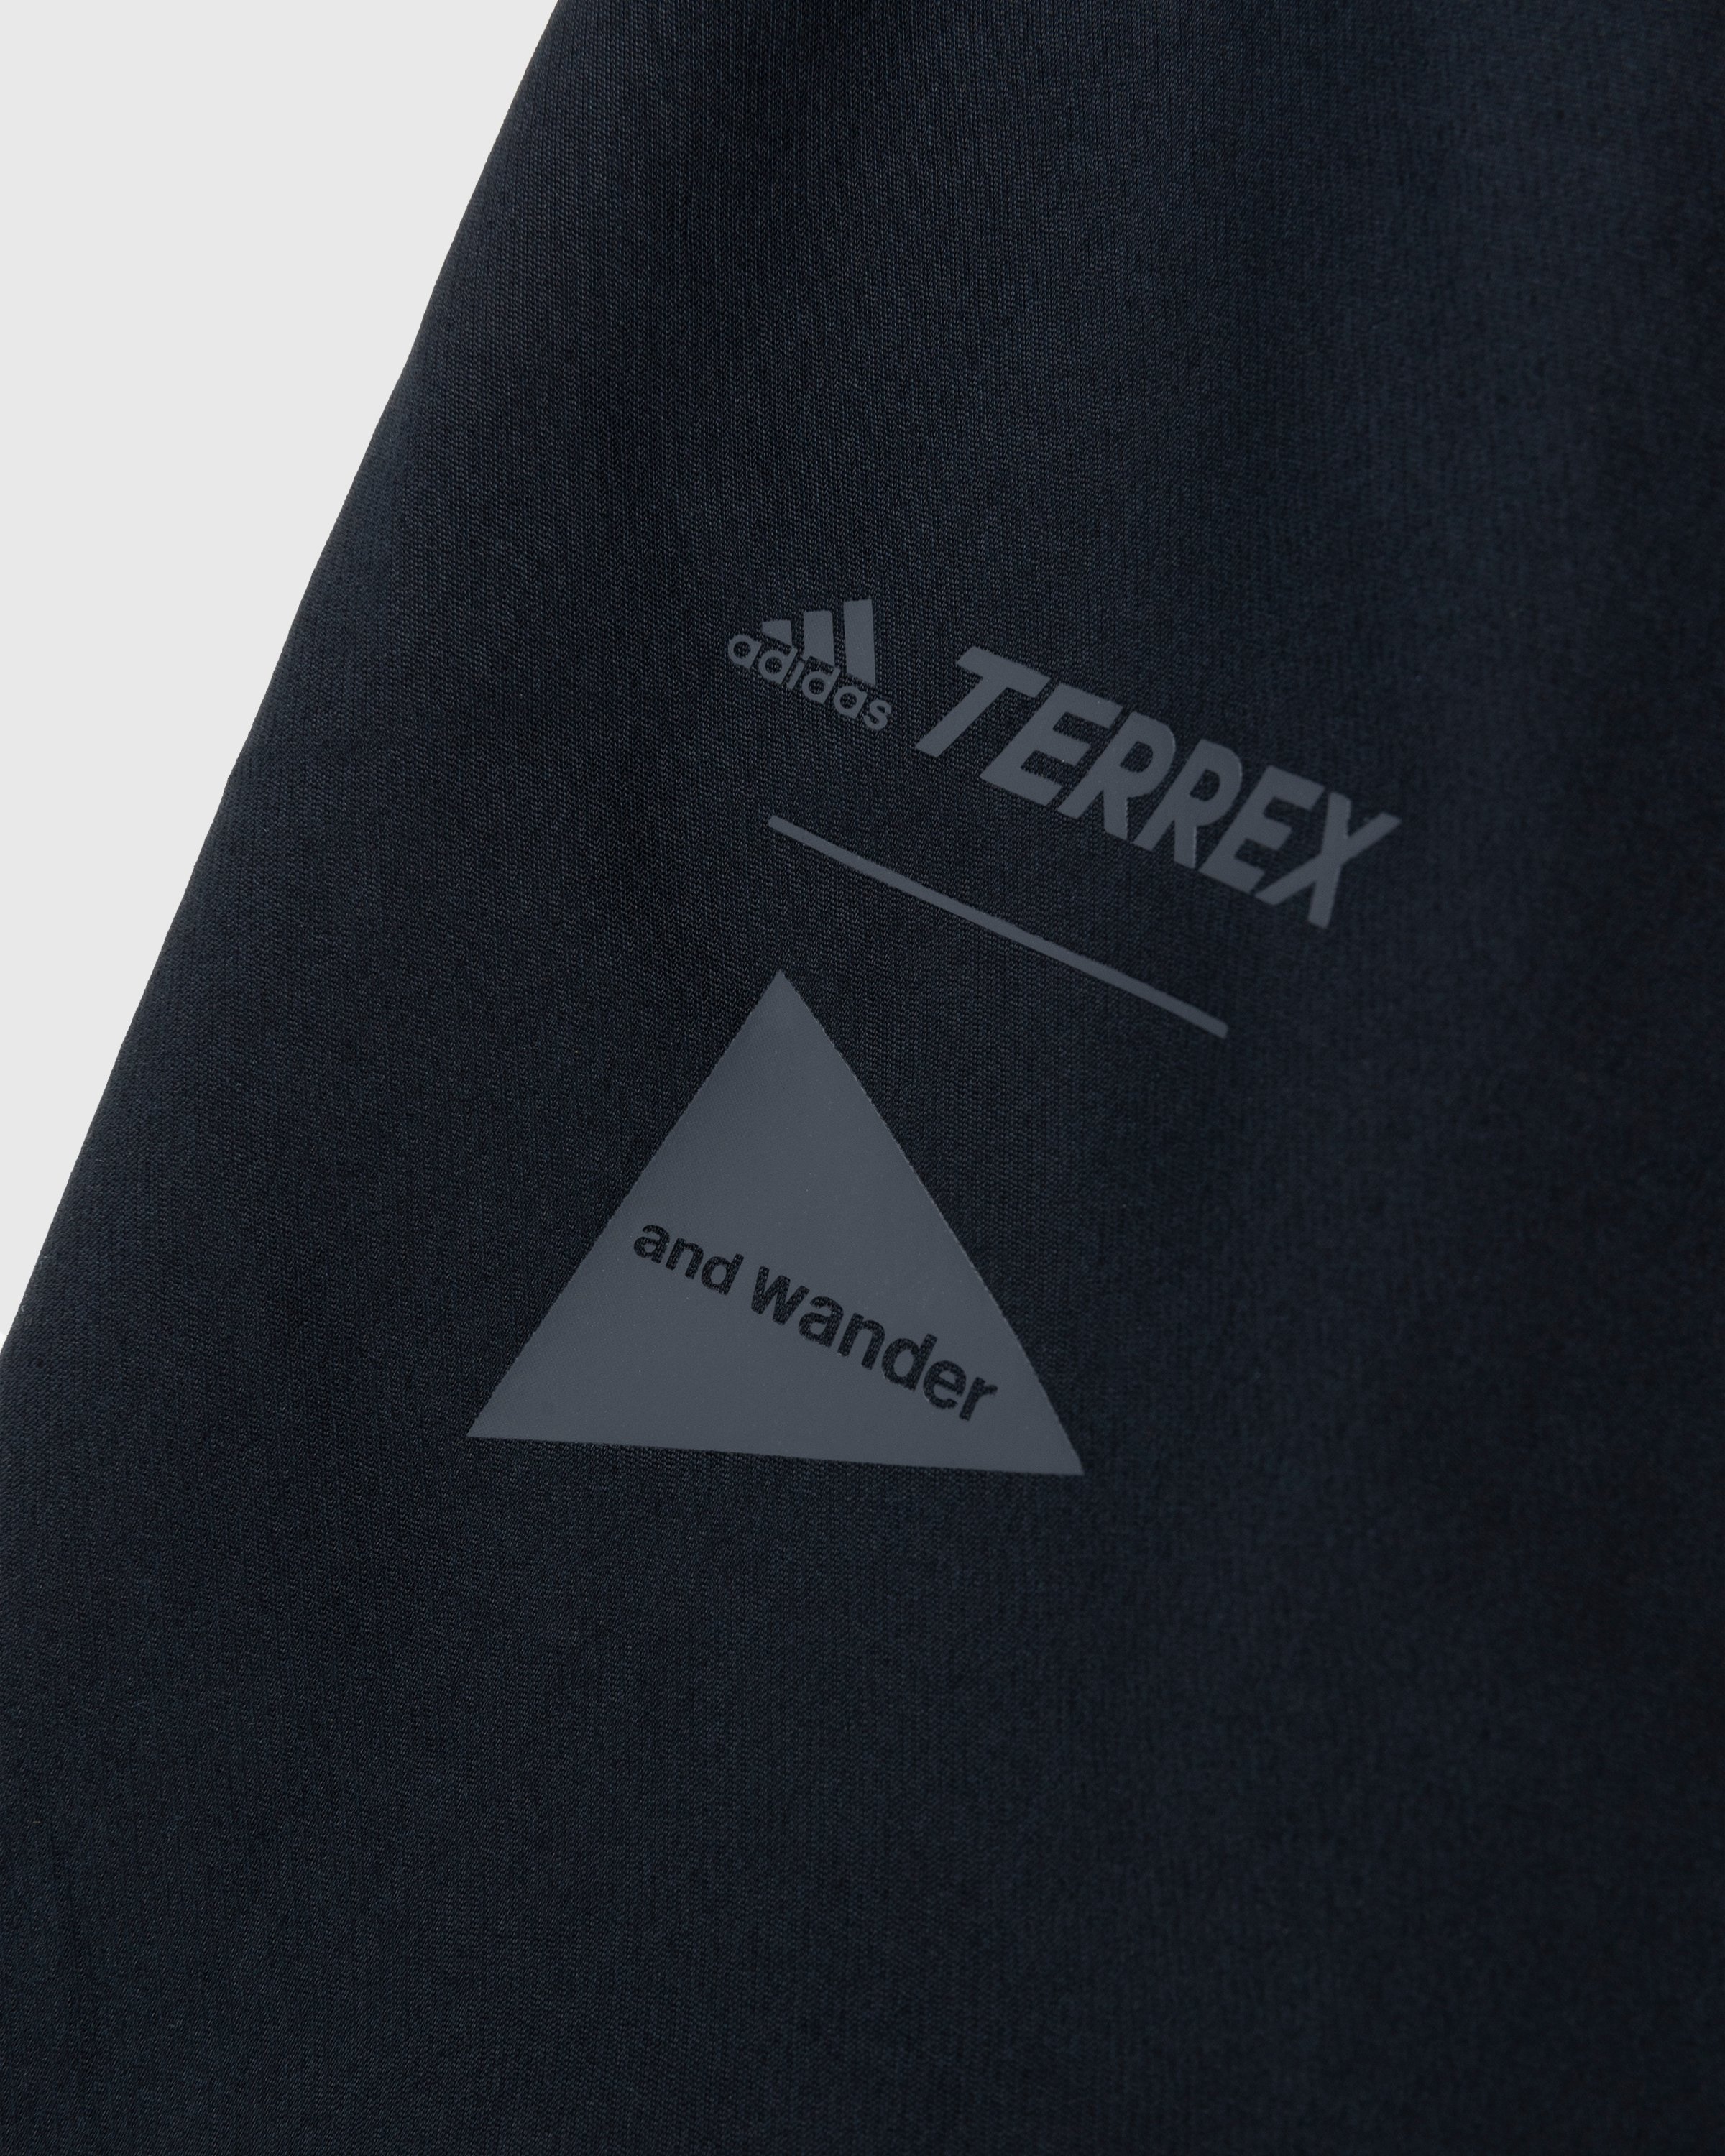 Adidas x And Wander - TERREX Hiking Pants Black - Clothing - Black - Image 3